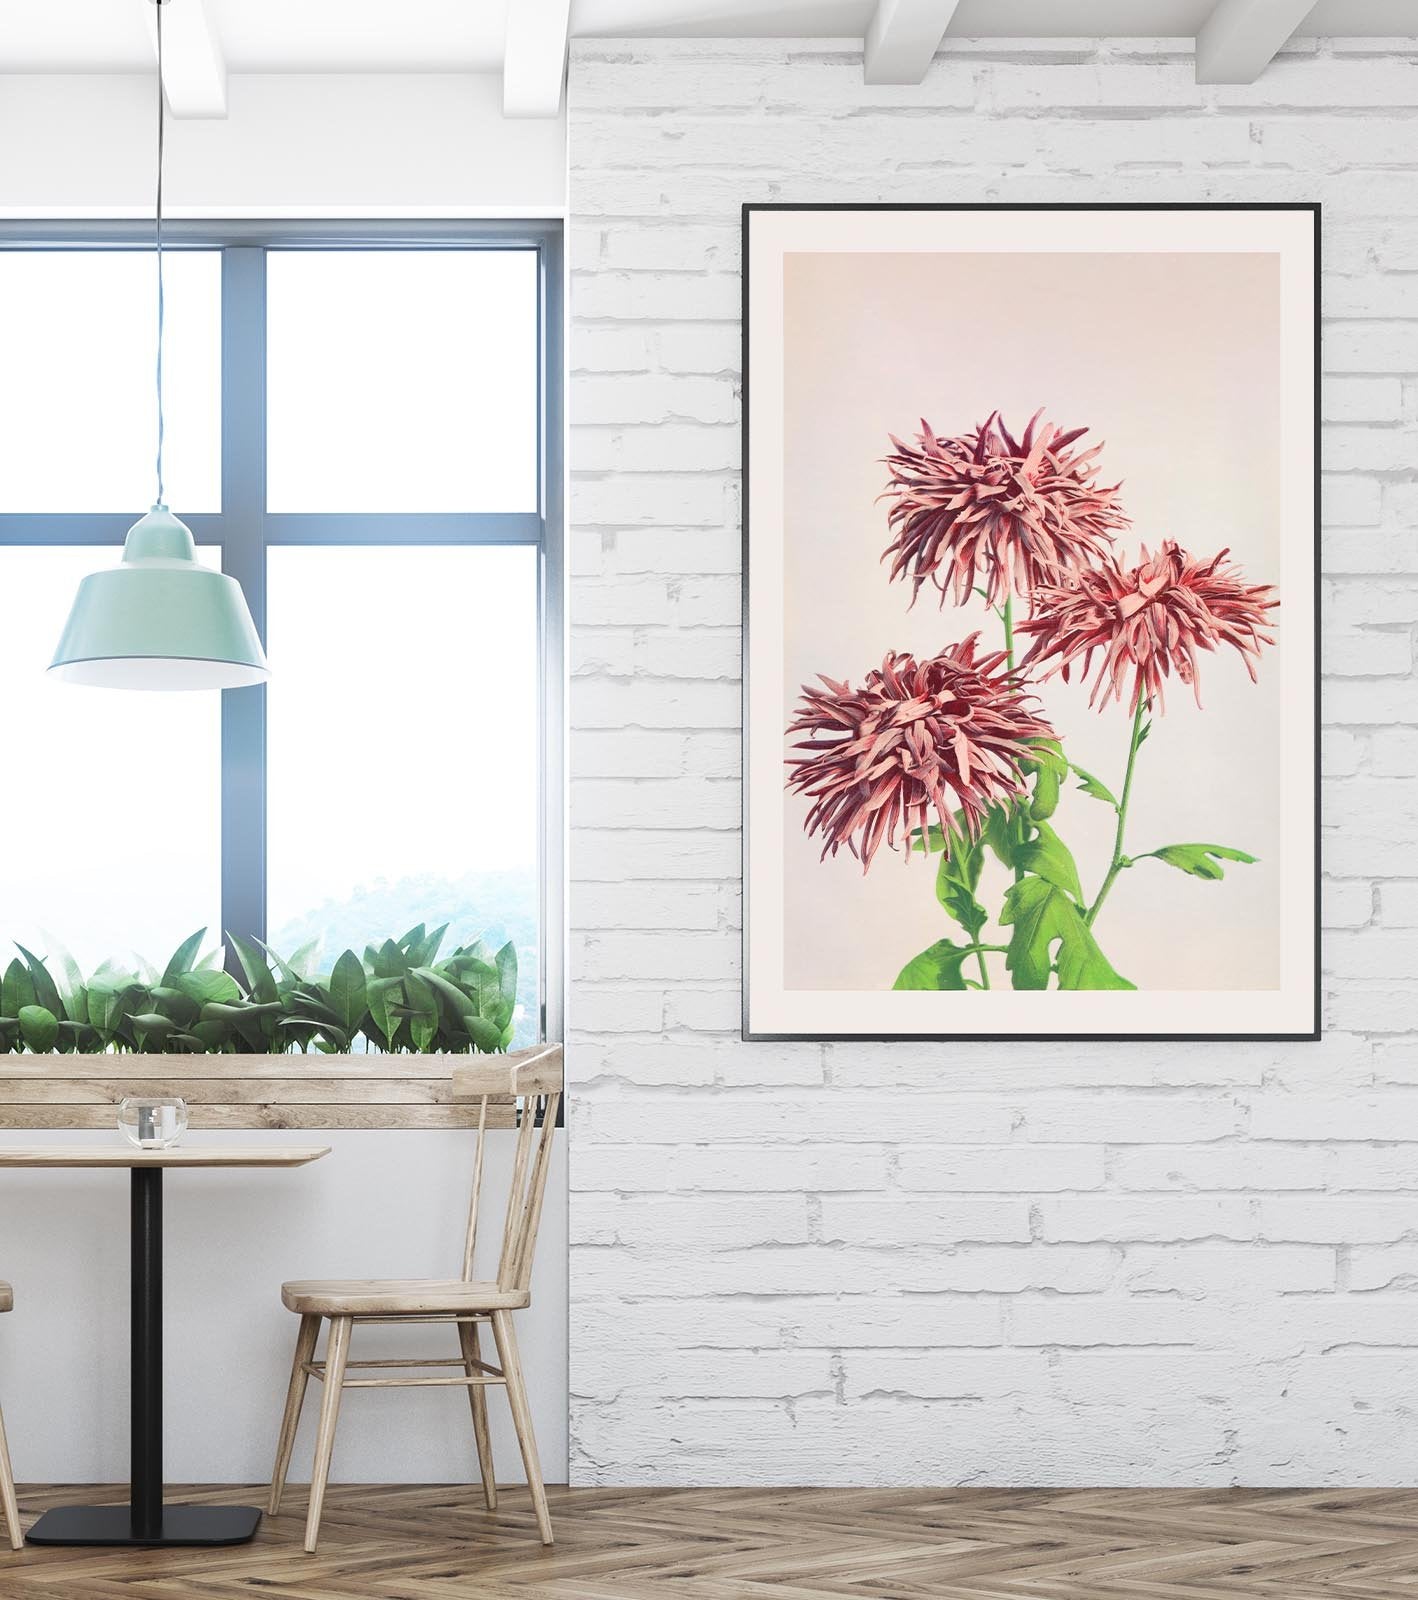 Three Pink Chrysanthemum by Ogawa Kazumasa